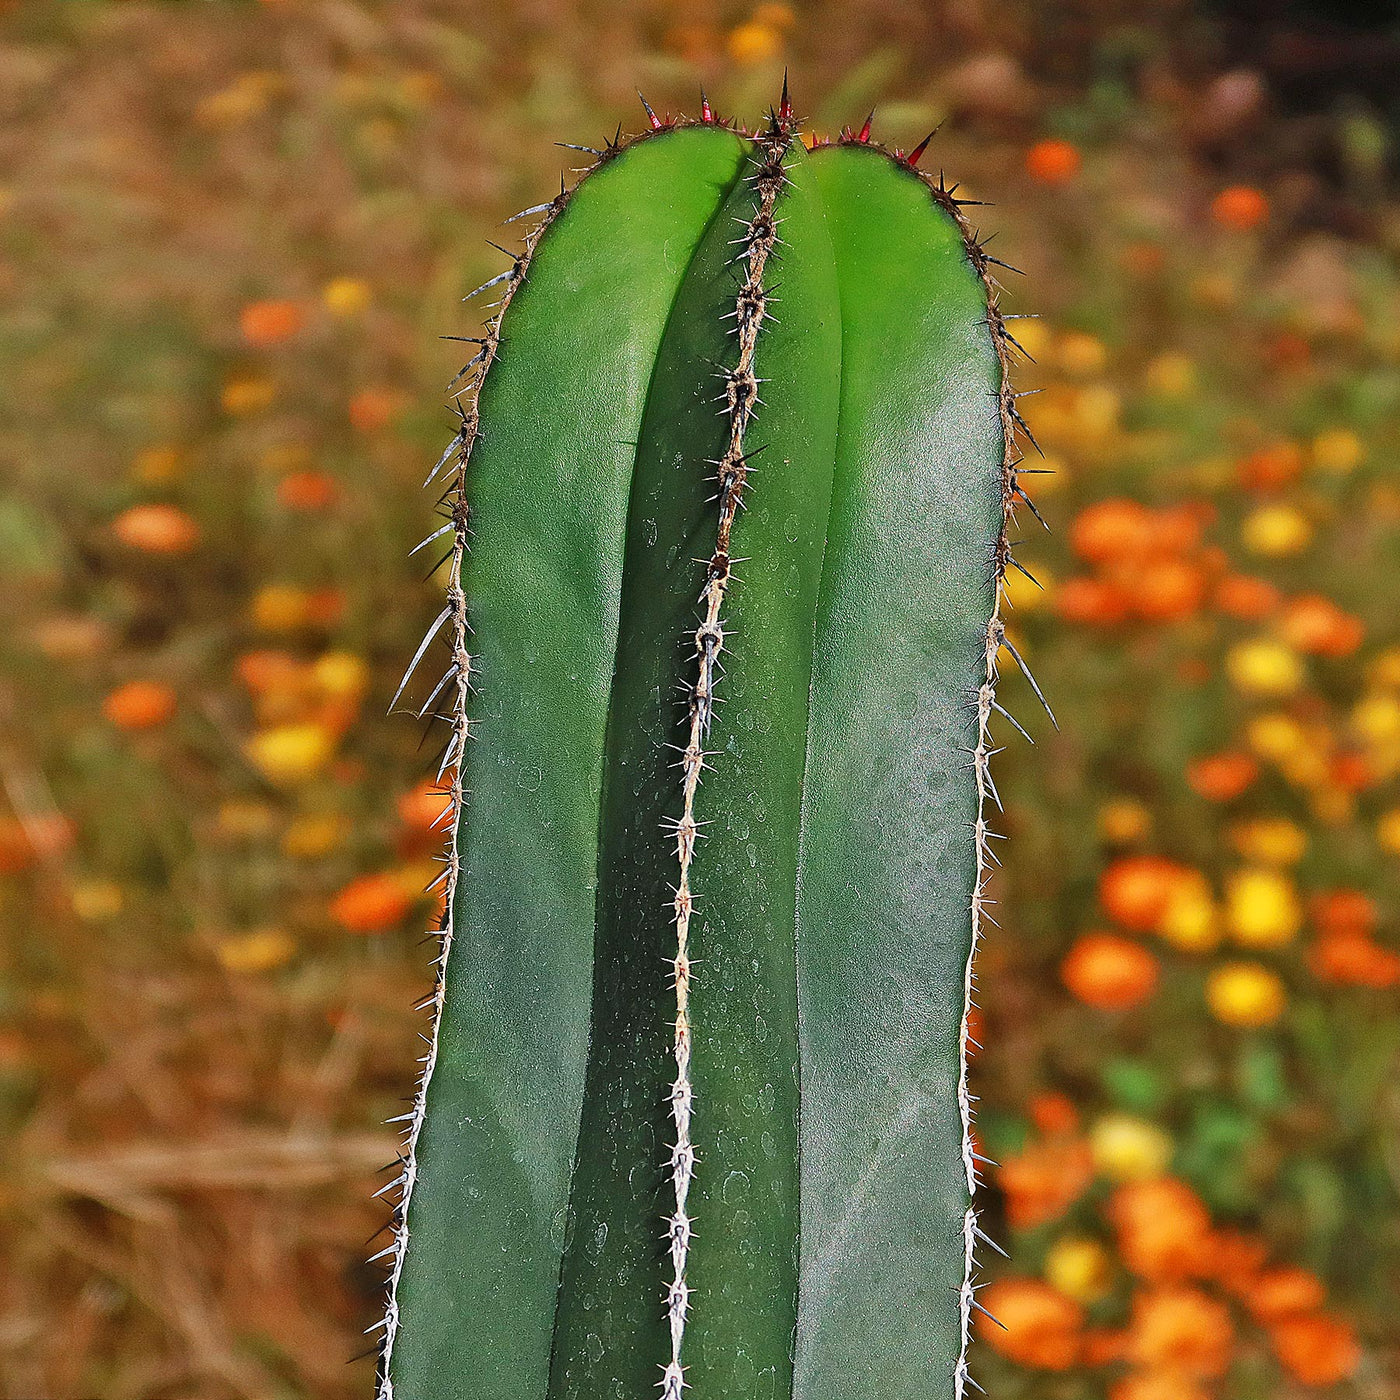 Mexican Fence Post Cactus 'Pachycereus marginatus' (2)